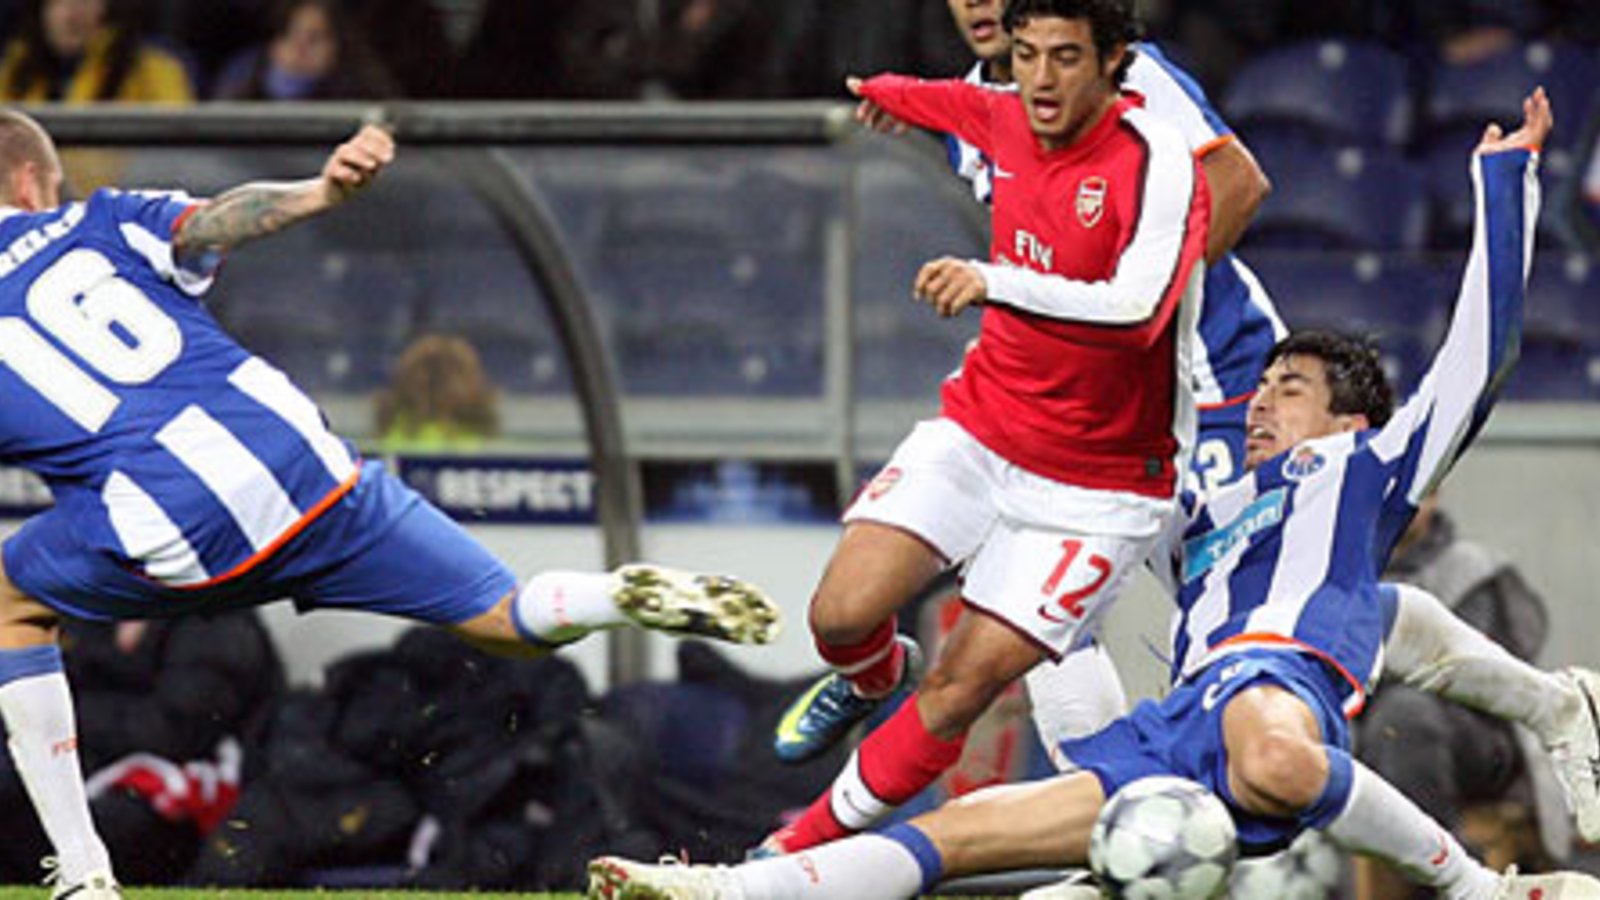 FC Porto 2 - 0 Arsenal - Match Report | Arsenal.com